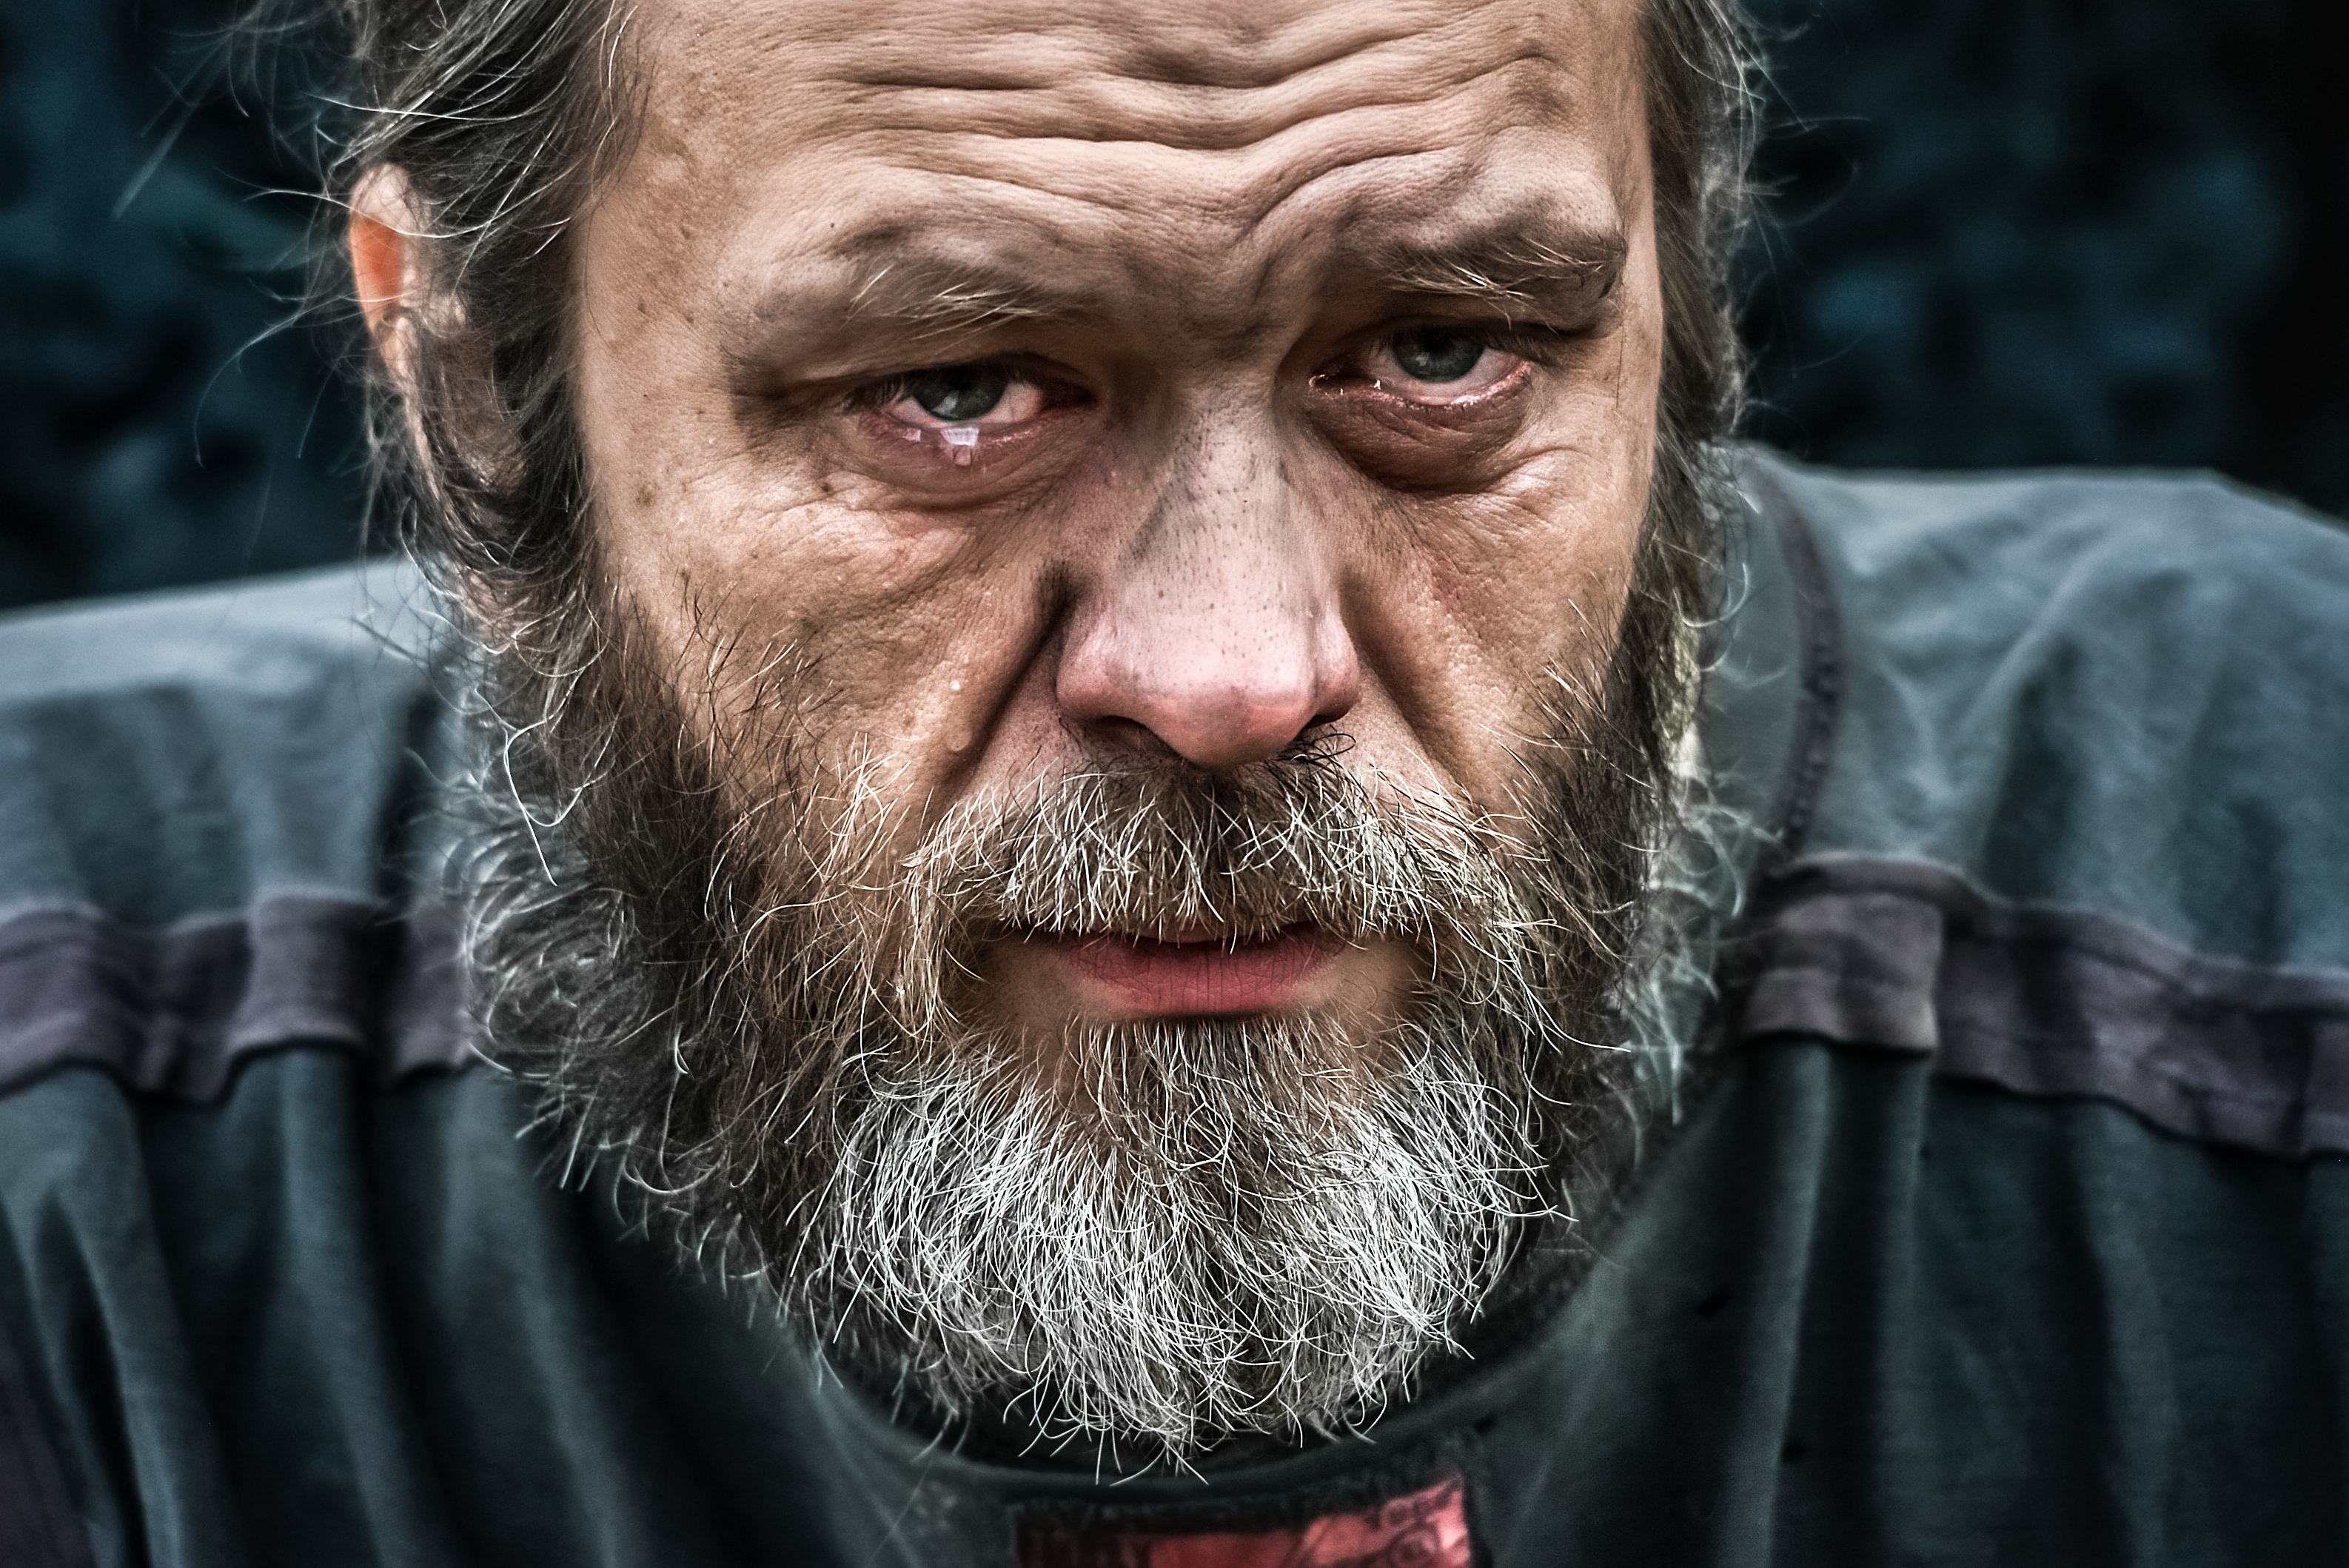 Crying homeless man | Shutterstock